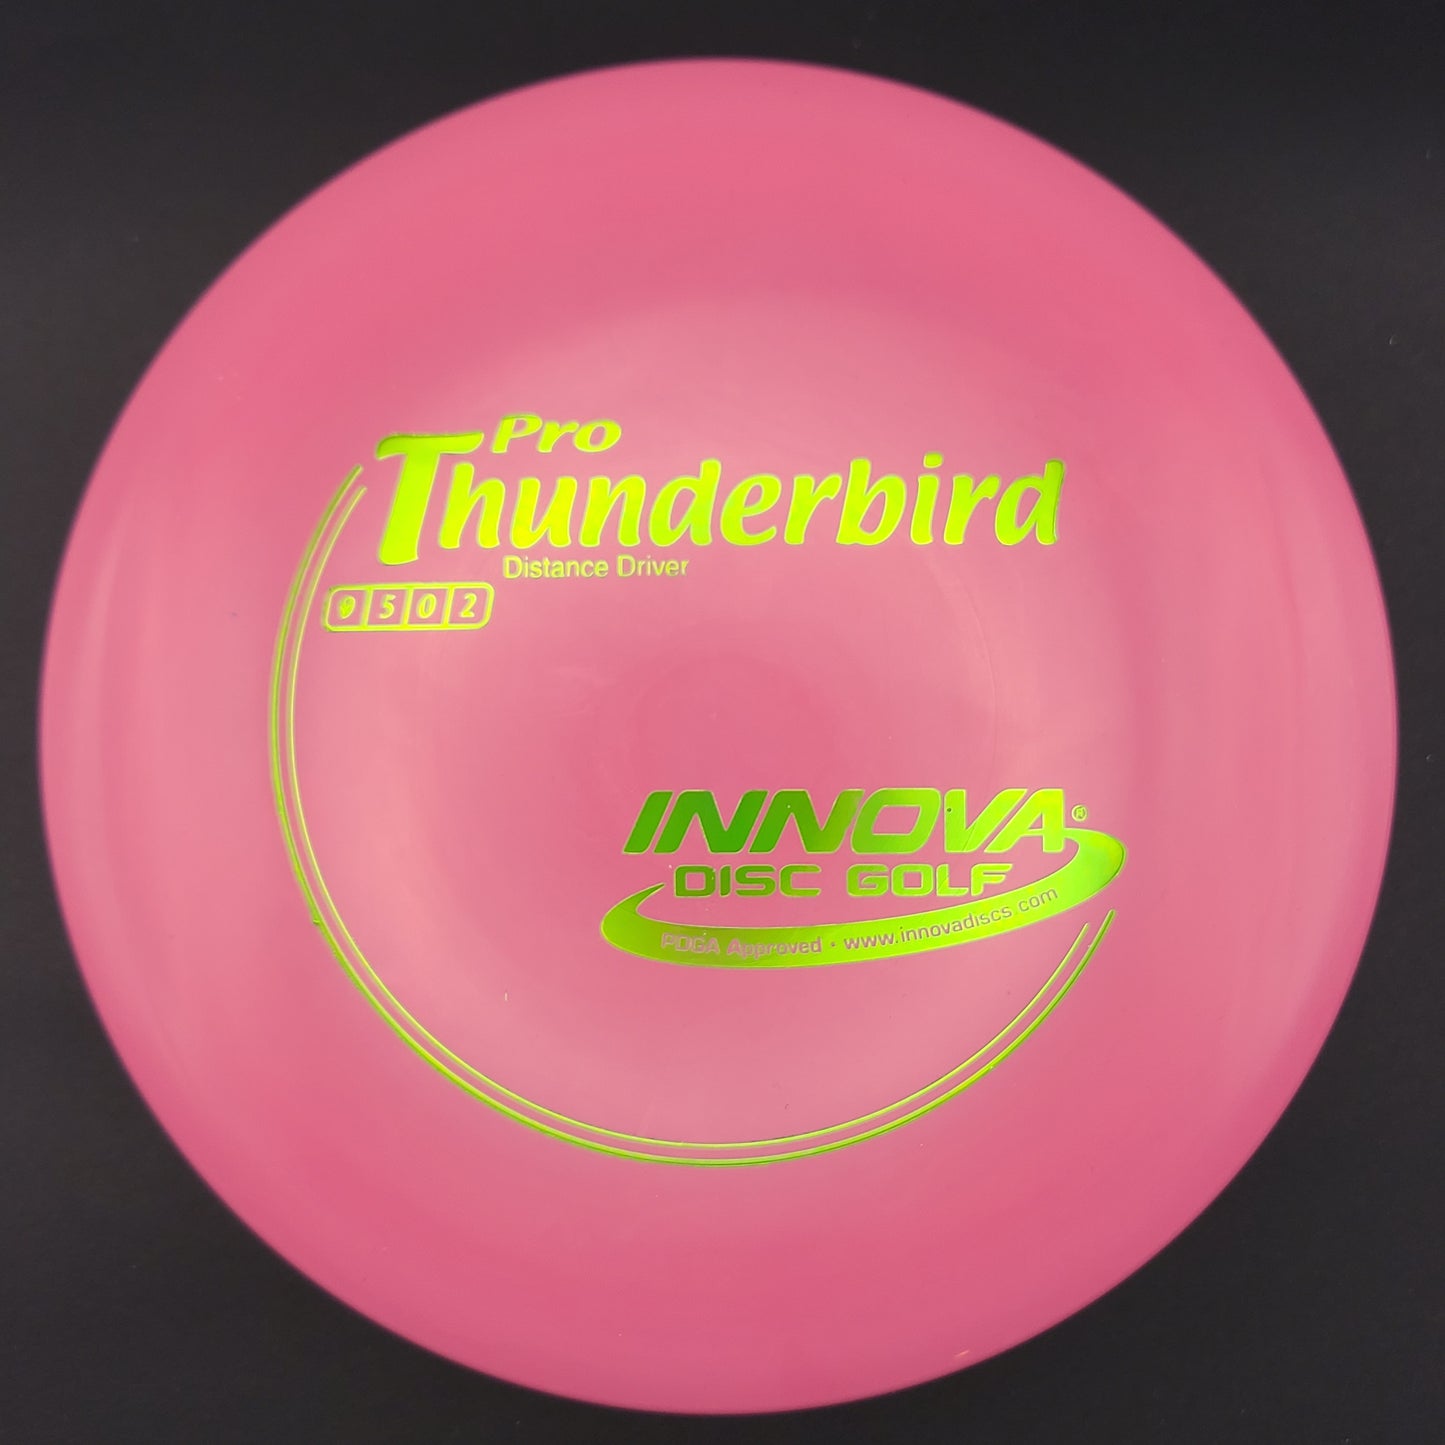 Innova - Thunderbird -  Pro